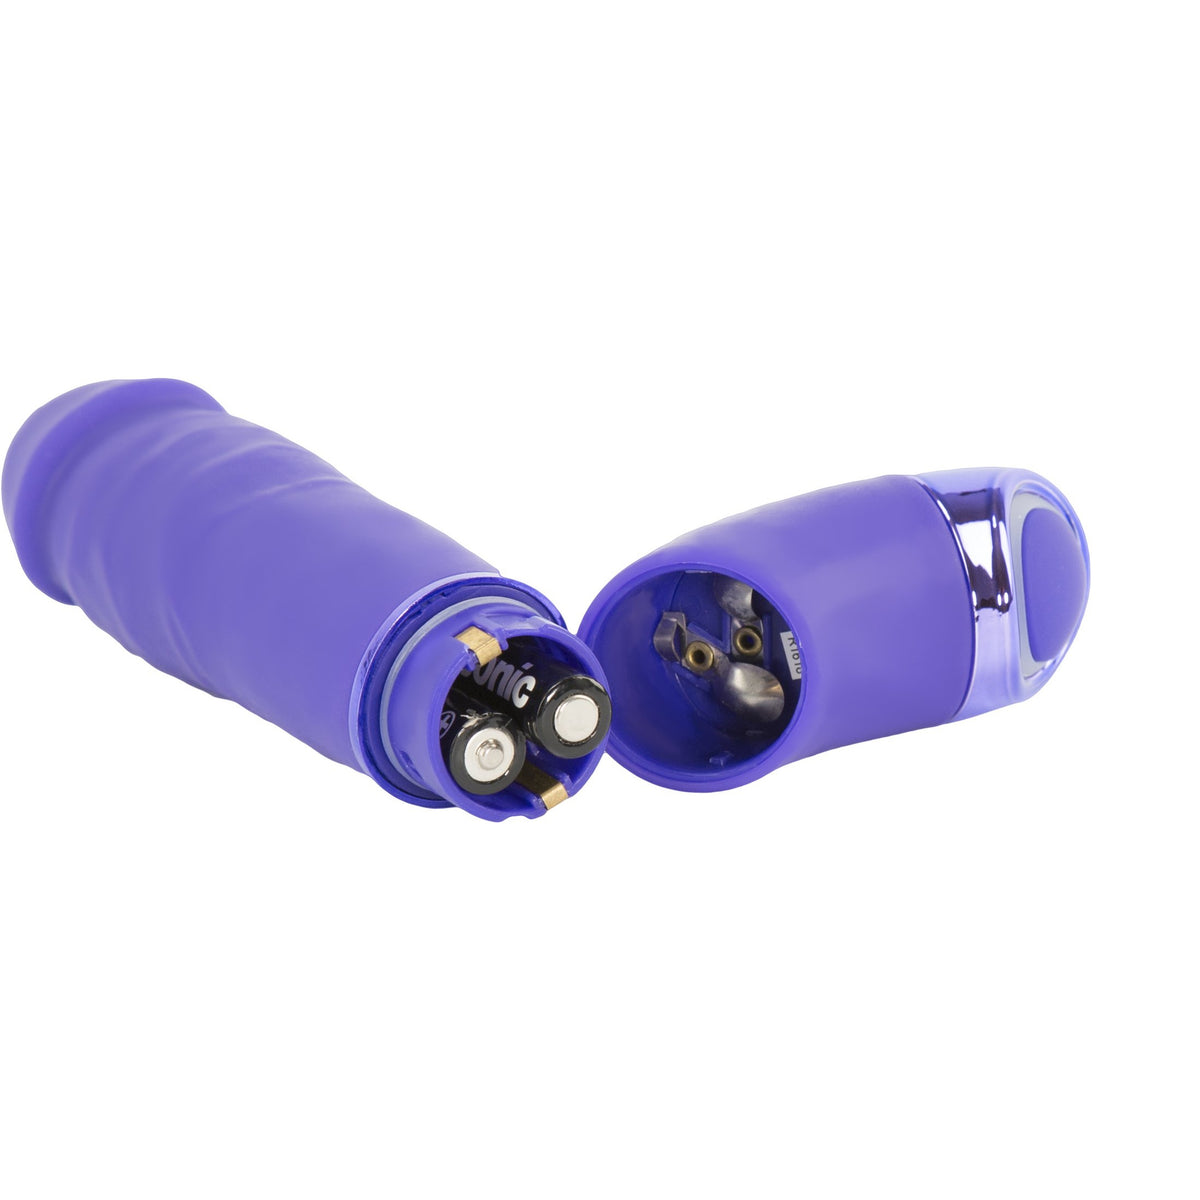 NMC Seduce 4.5 Inch - 10 Rhythm Vibrator - Penis - Purple